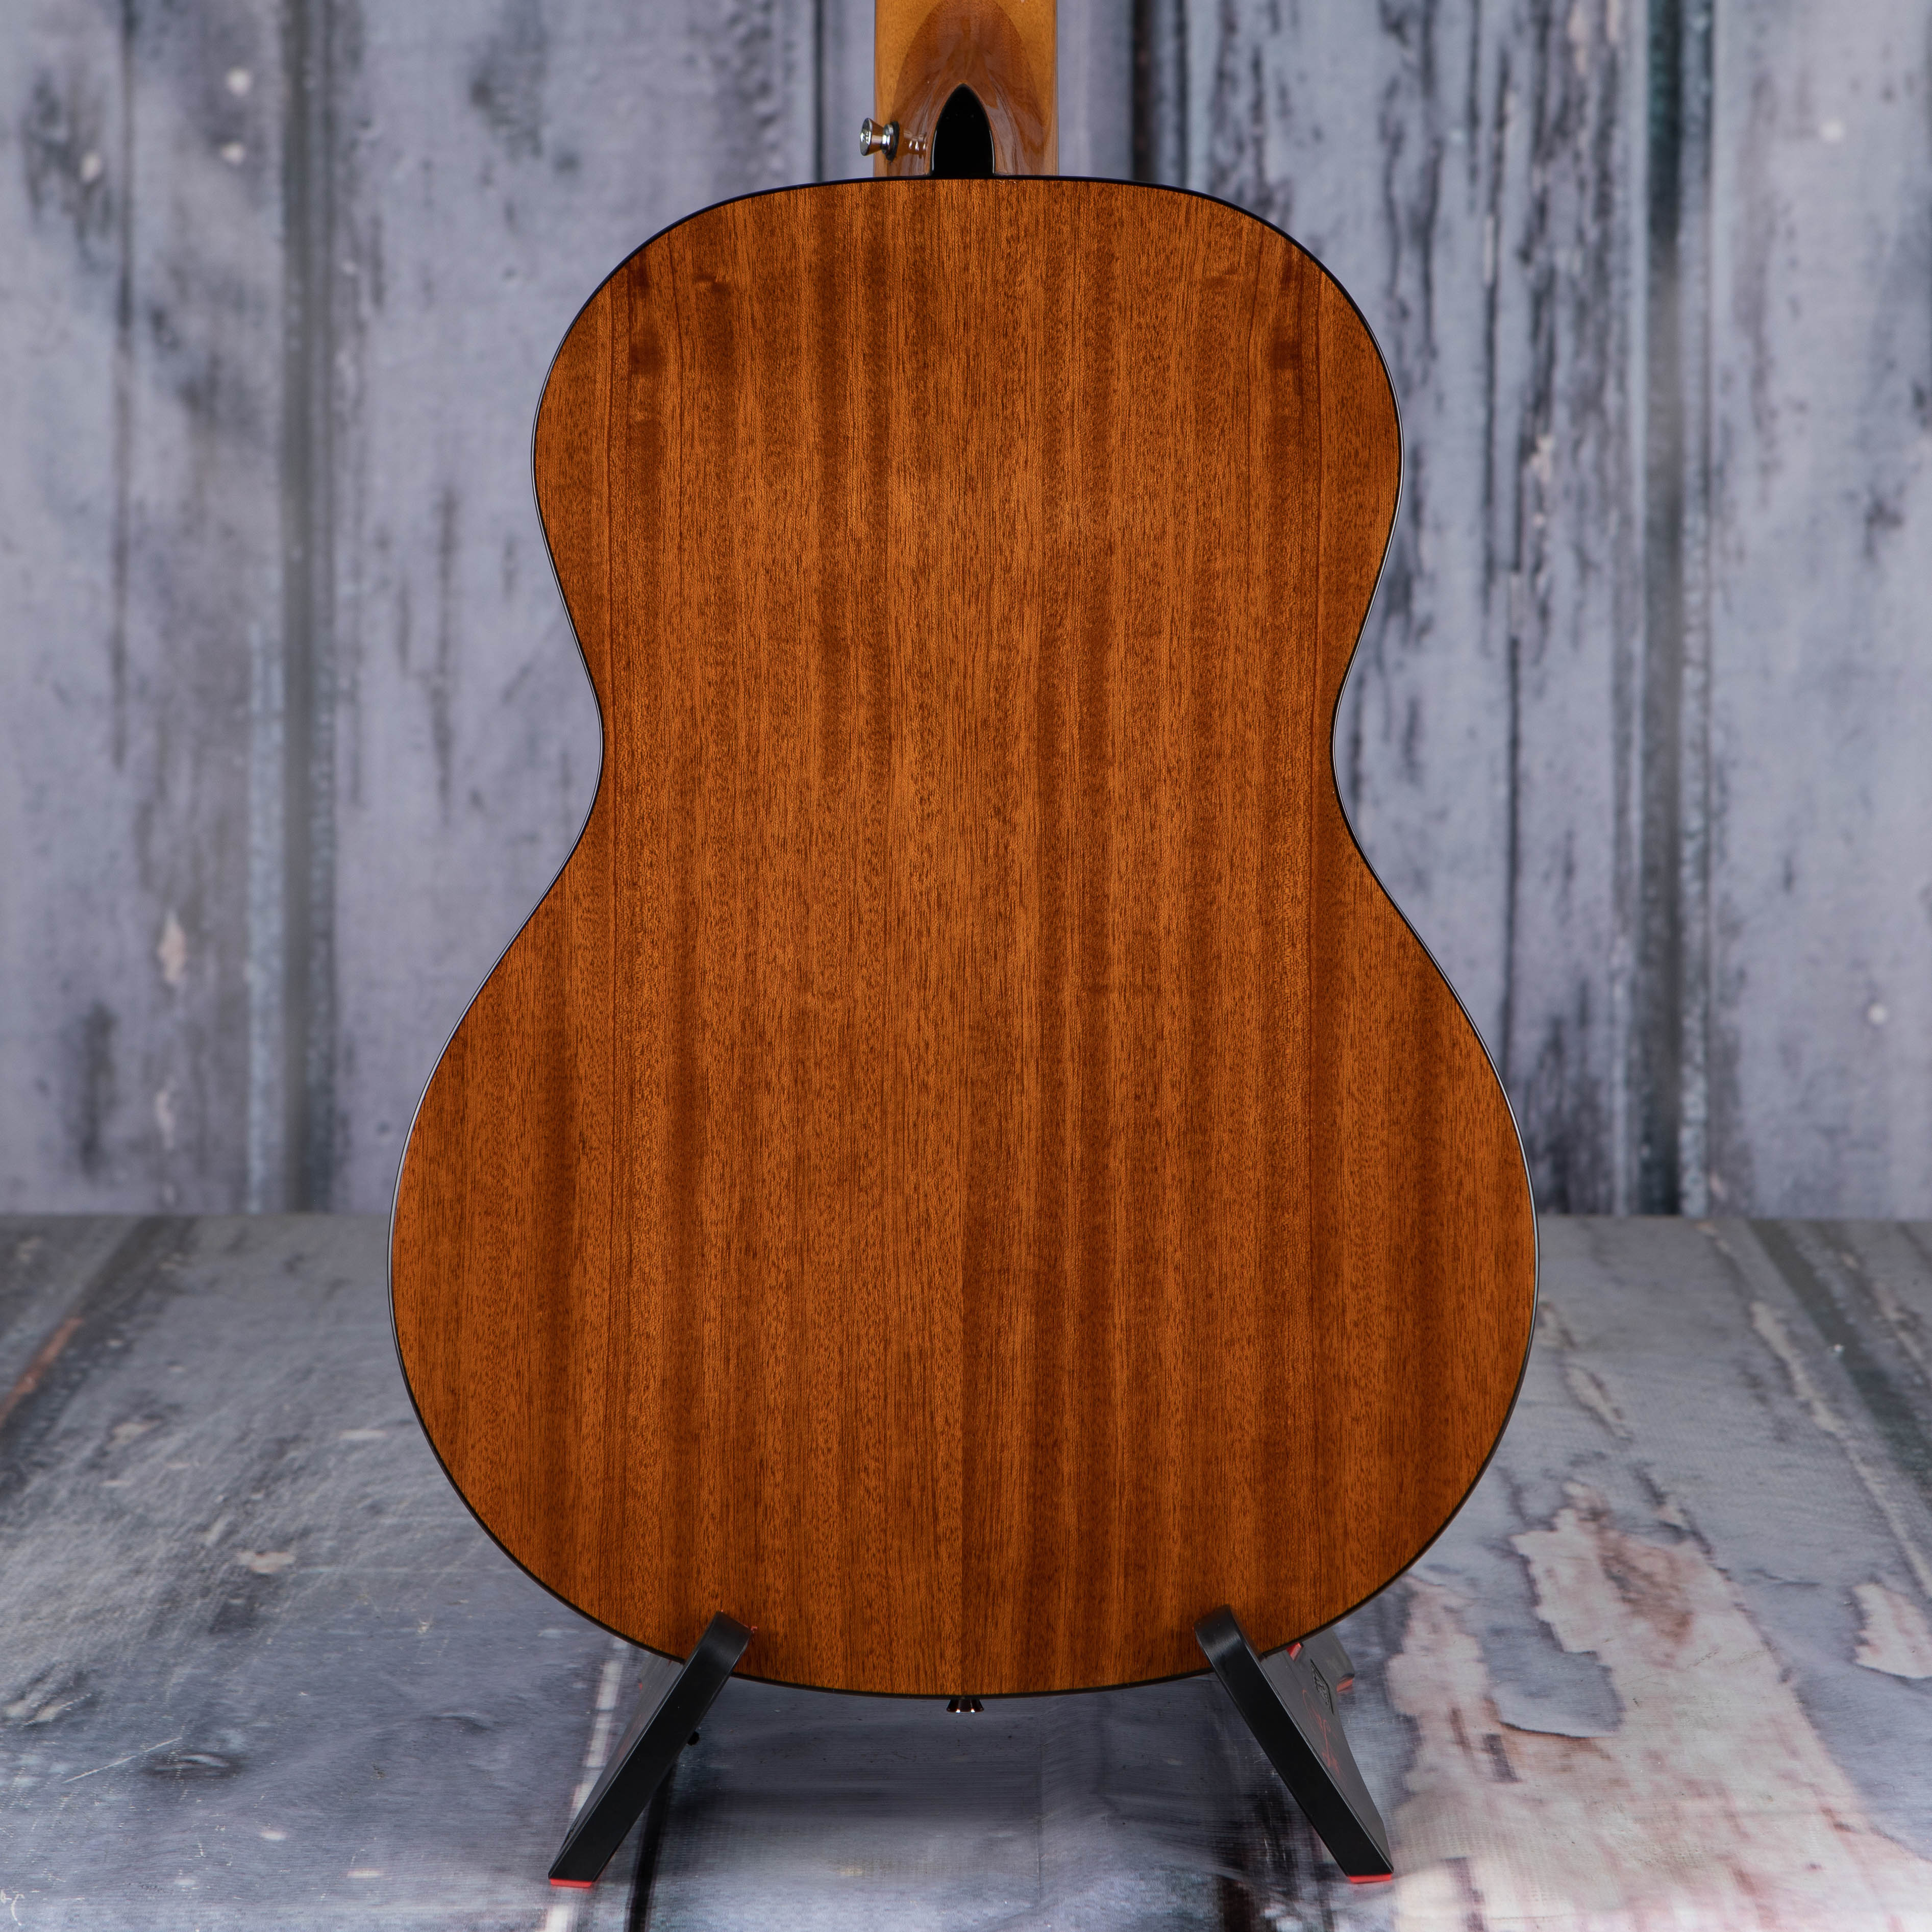 Epiphone PRO-1 Spanish Classic Acoustic Guitar, Antique Natural, back closeup